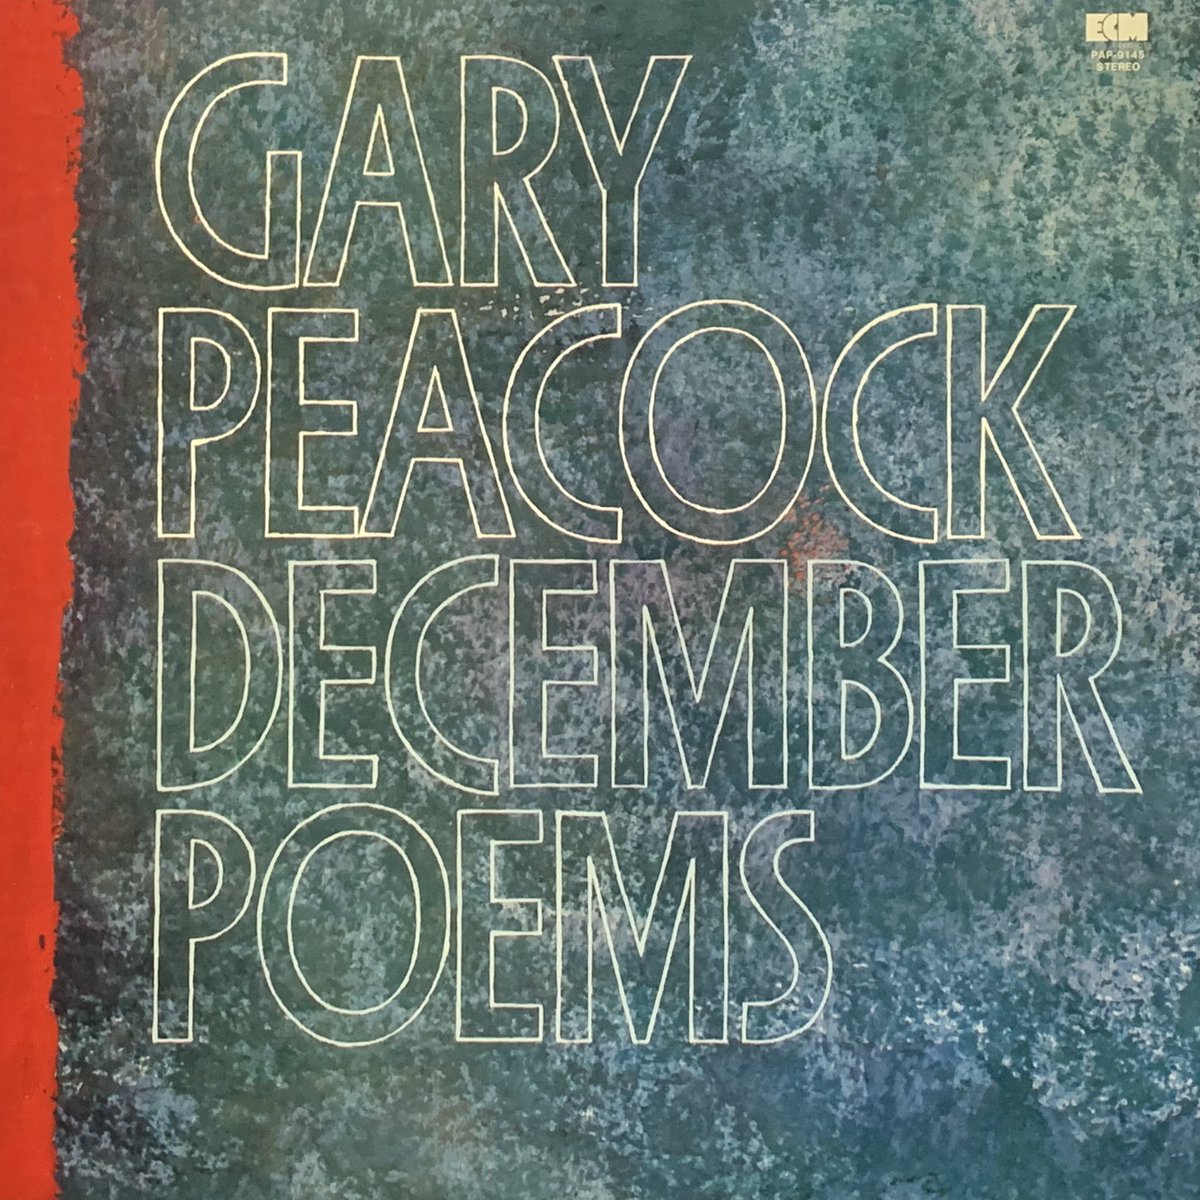 RT @suejazz2: Gary Peacock 
December Porms
Recorded December 1977 https://t.co/4Vph2XG0Dt